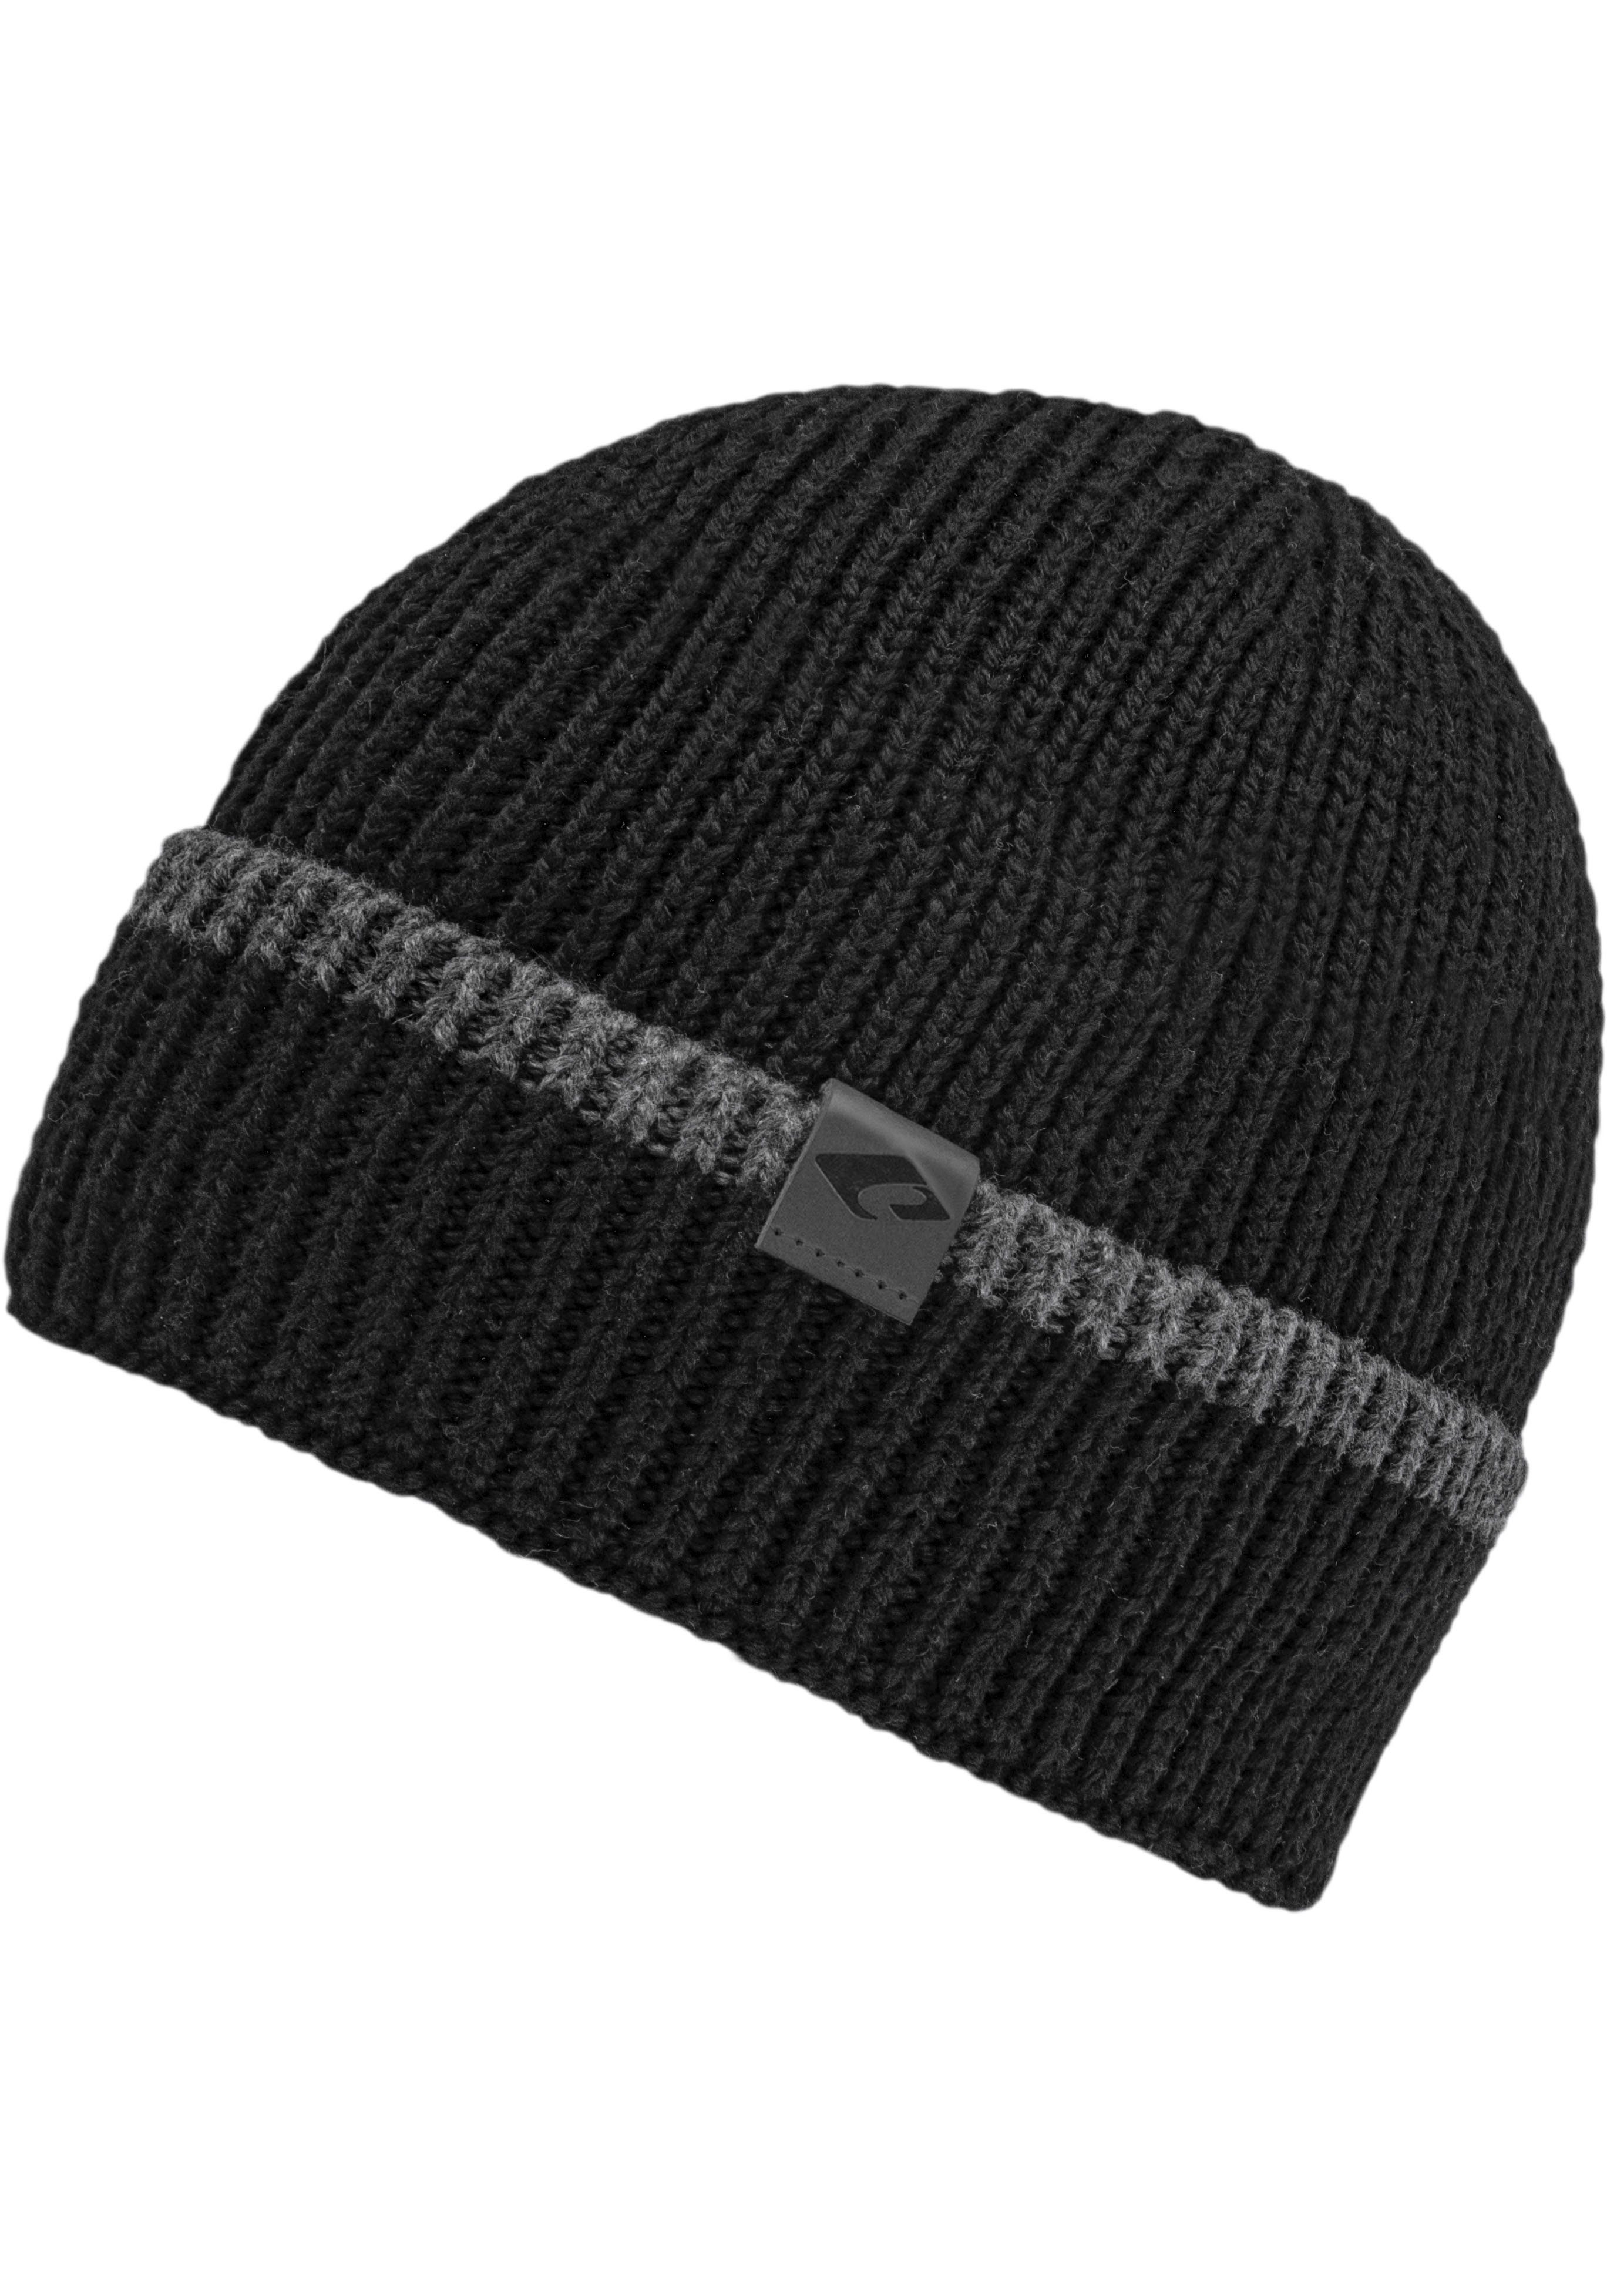 chillouts Strickmütze Pascal black Kontrastfarbener Rand Hat